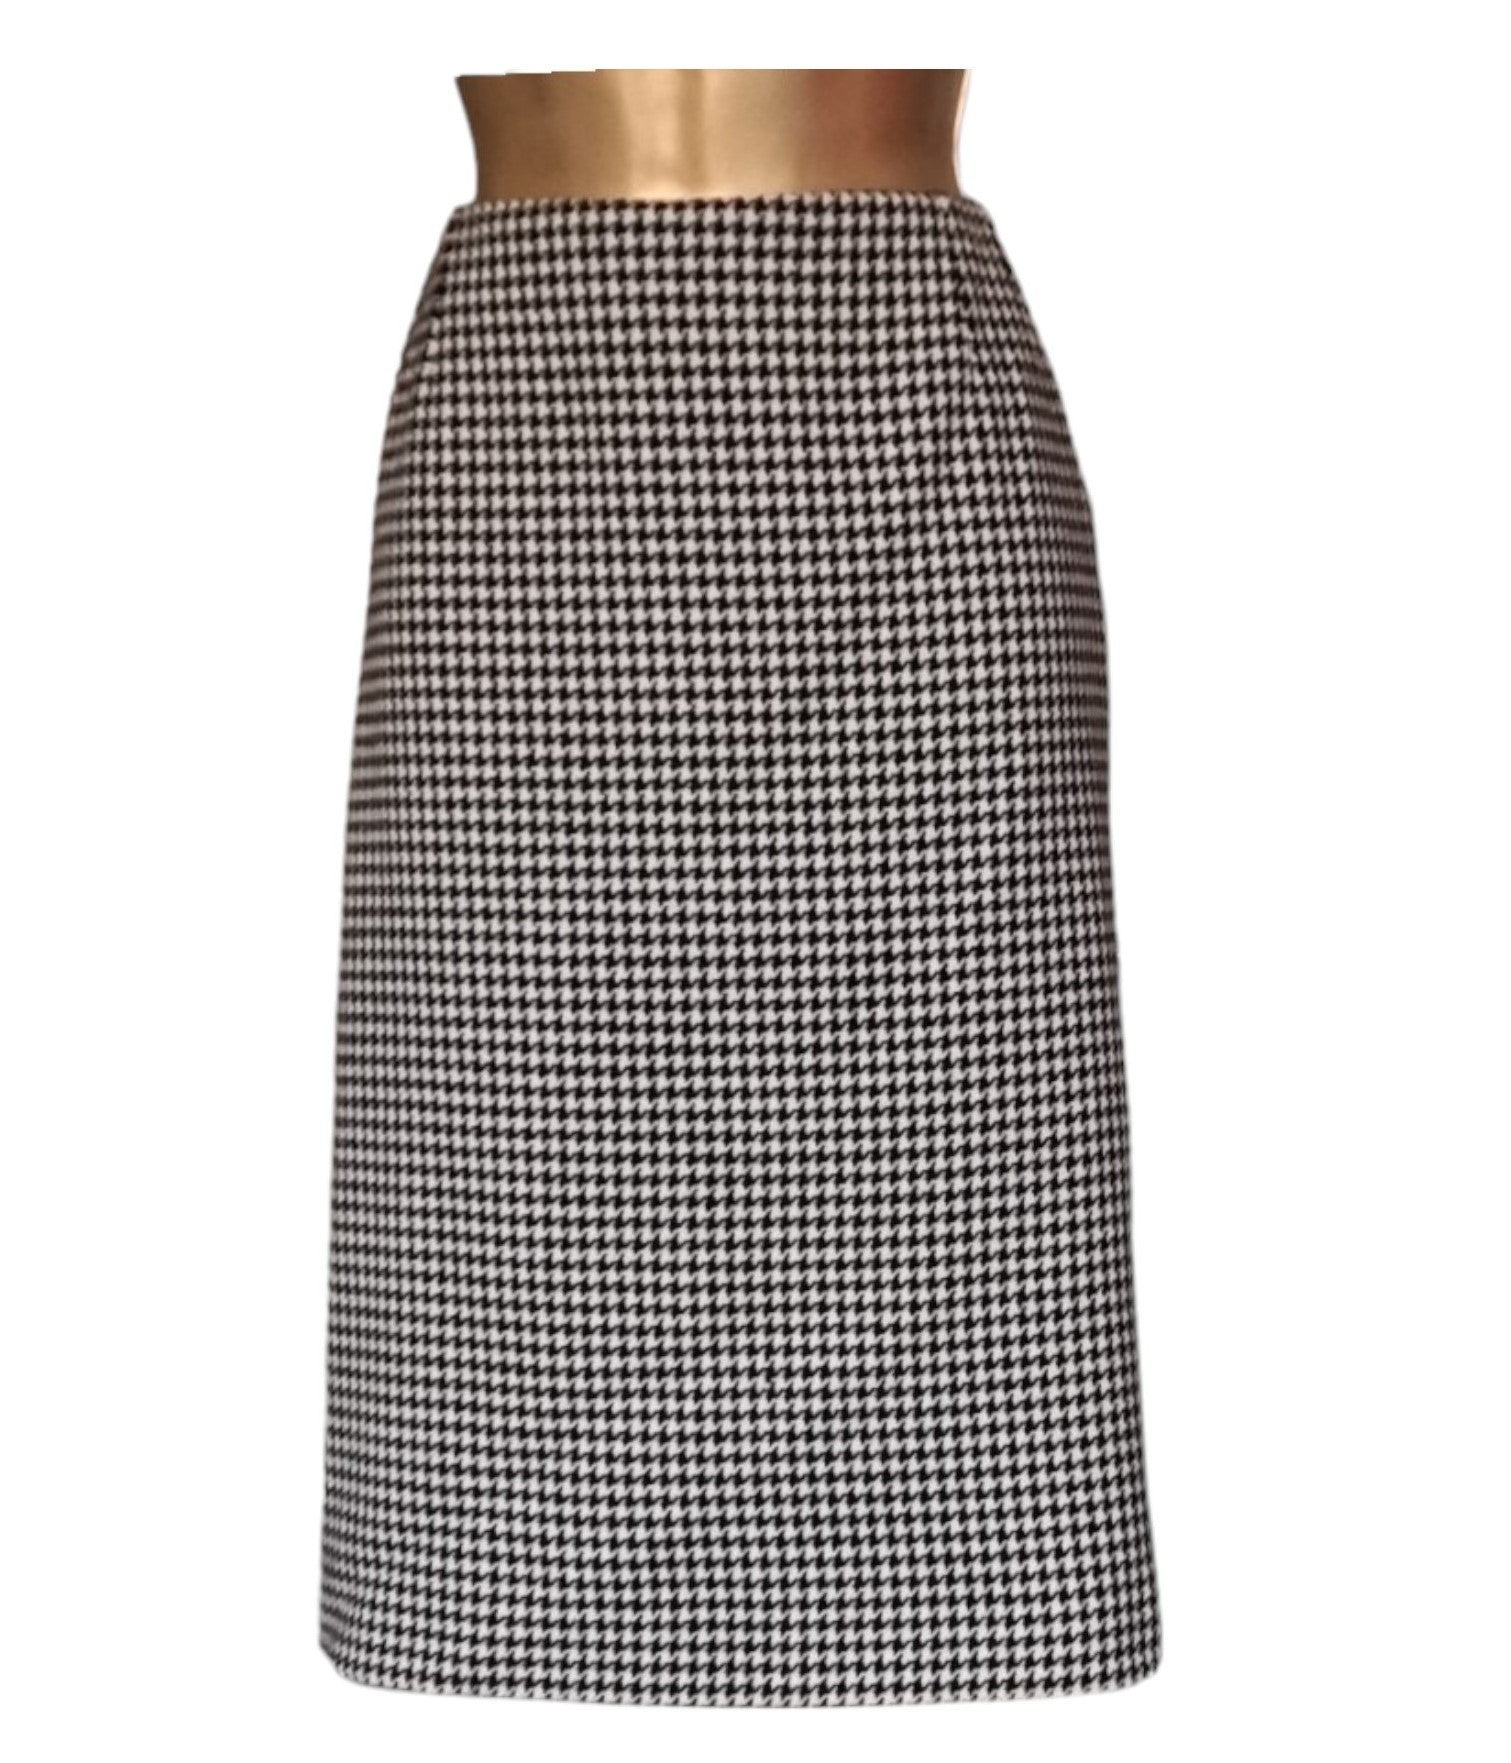 Caroline Charles London Vintage Houndstooth Skirt Suit UK 18 US 14 EU 46 IT 50 Timeless Fashions